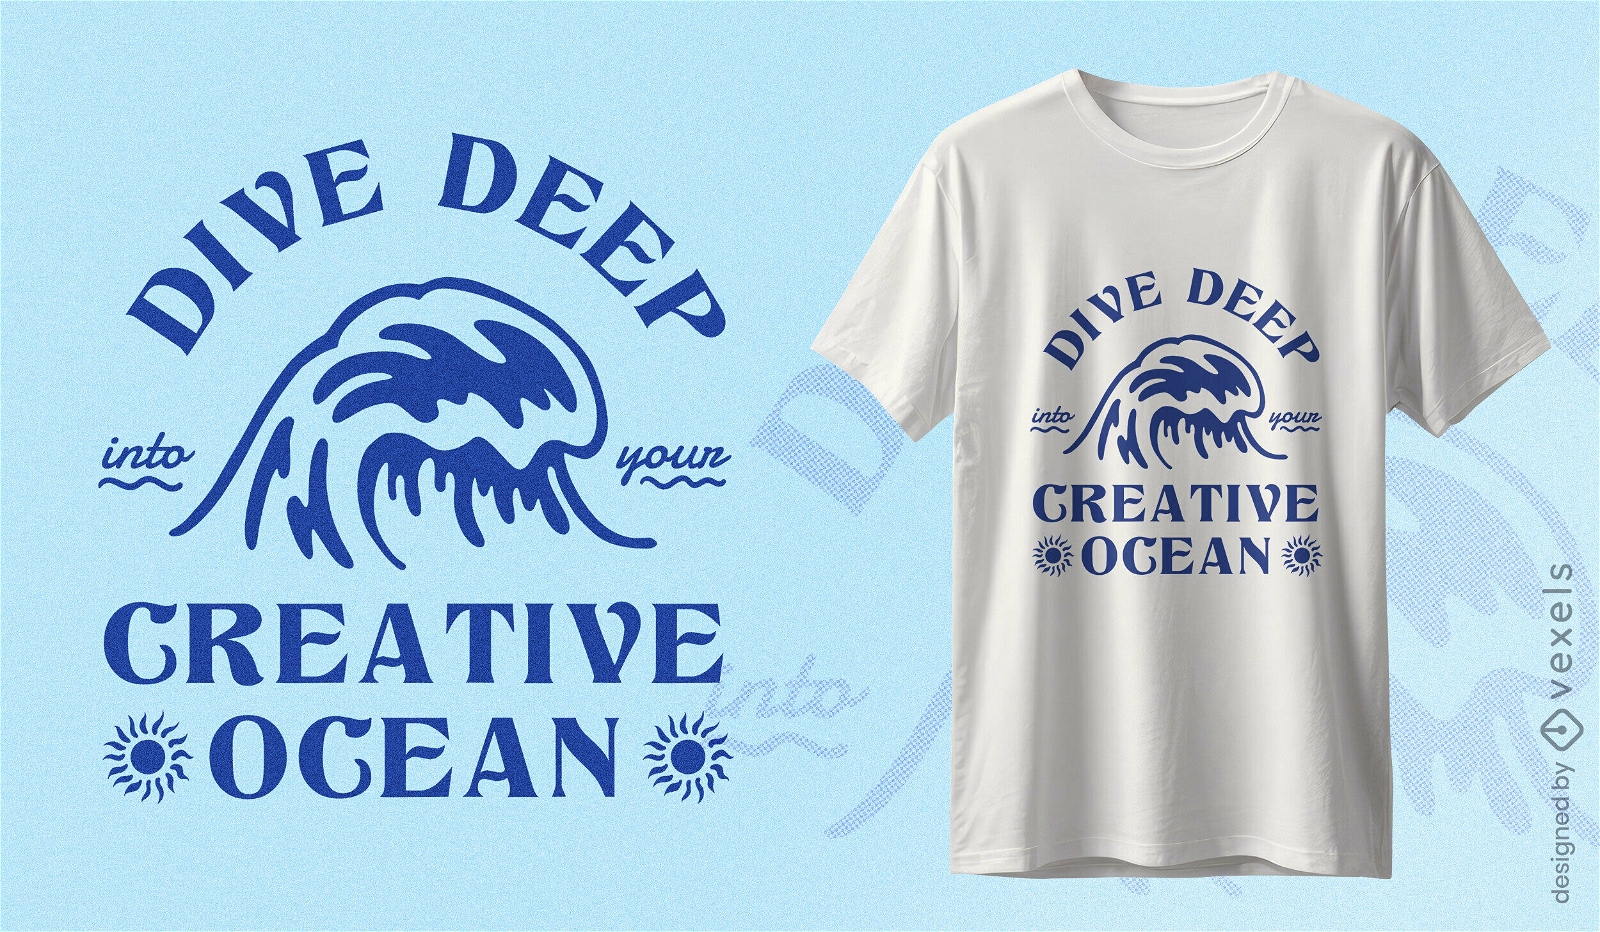 Creative ocean wave t-shirt design